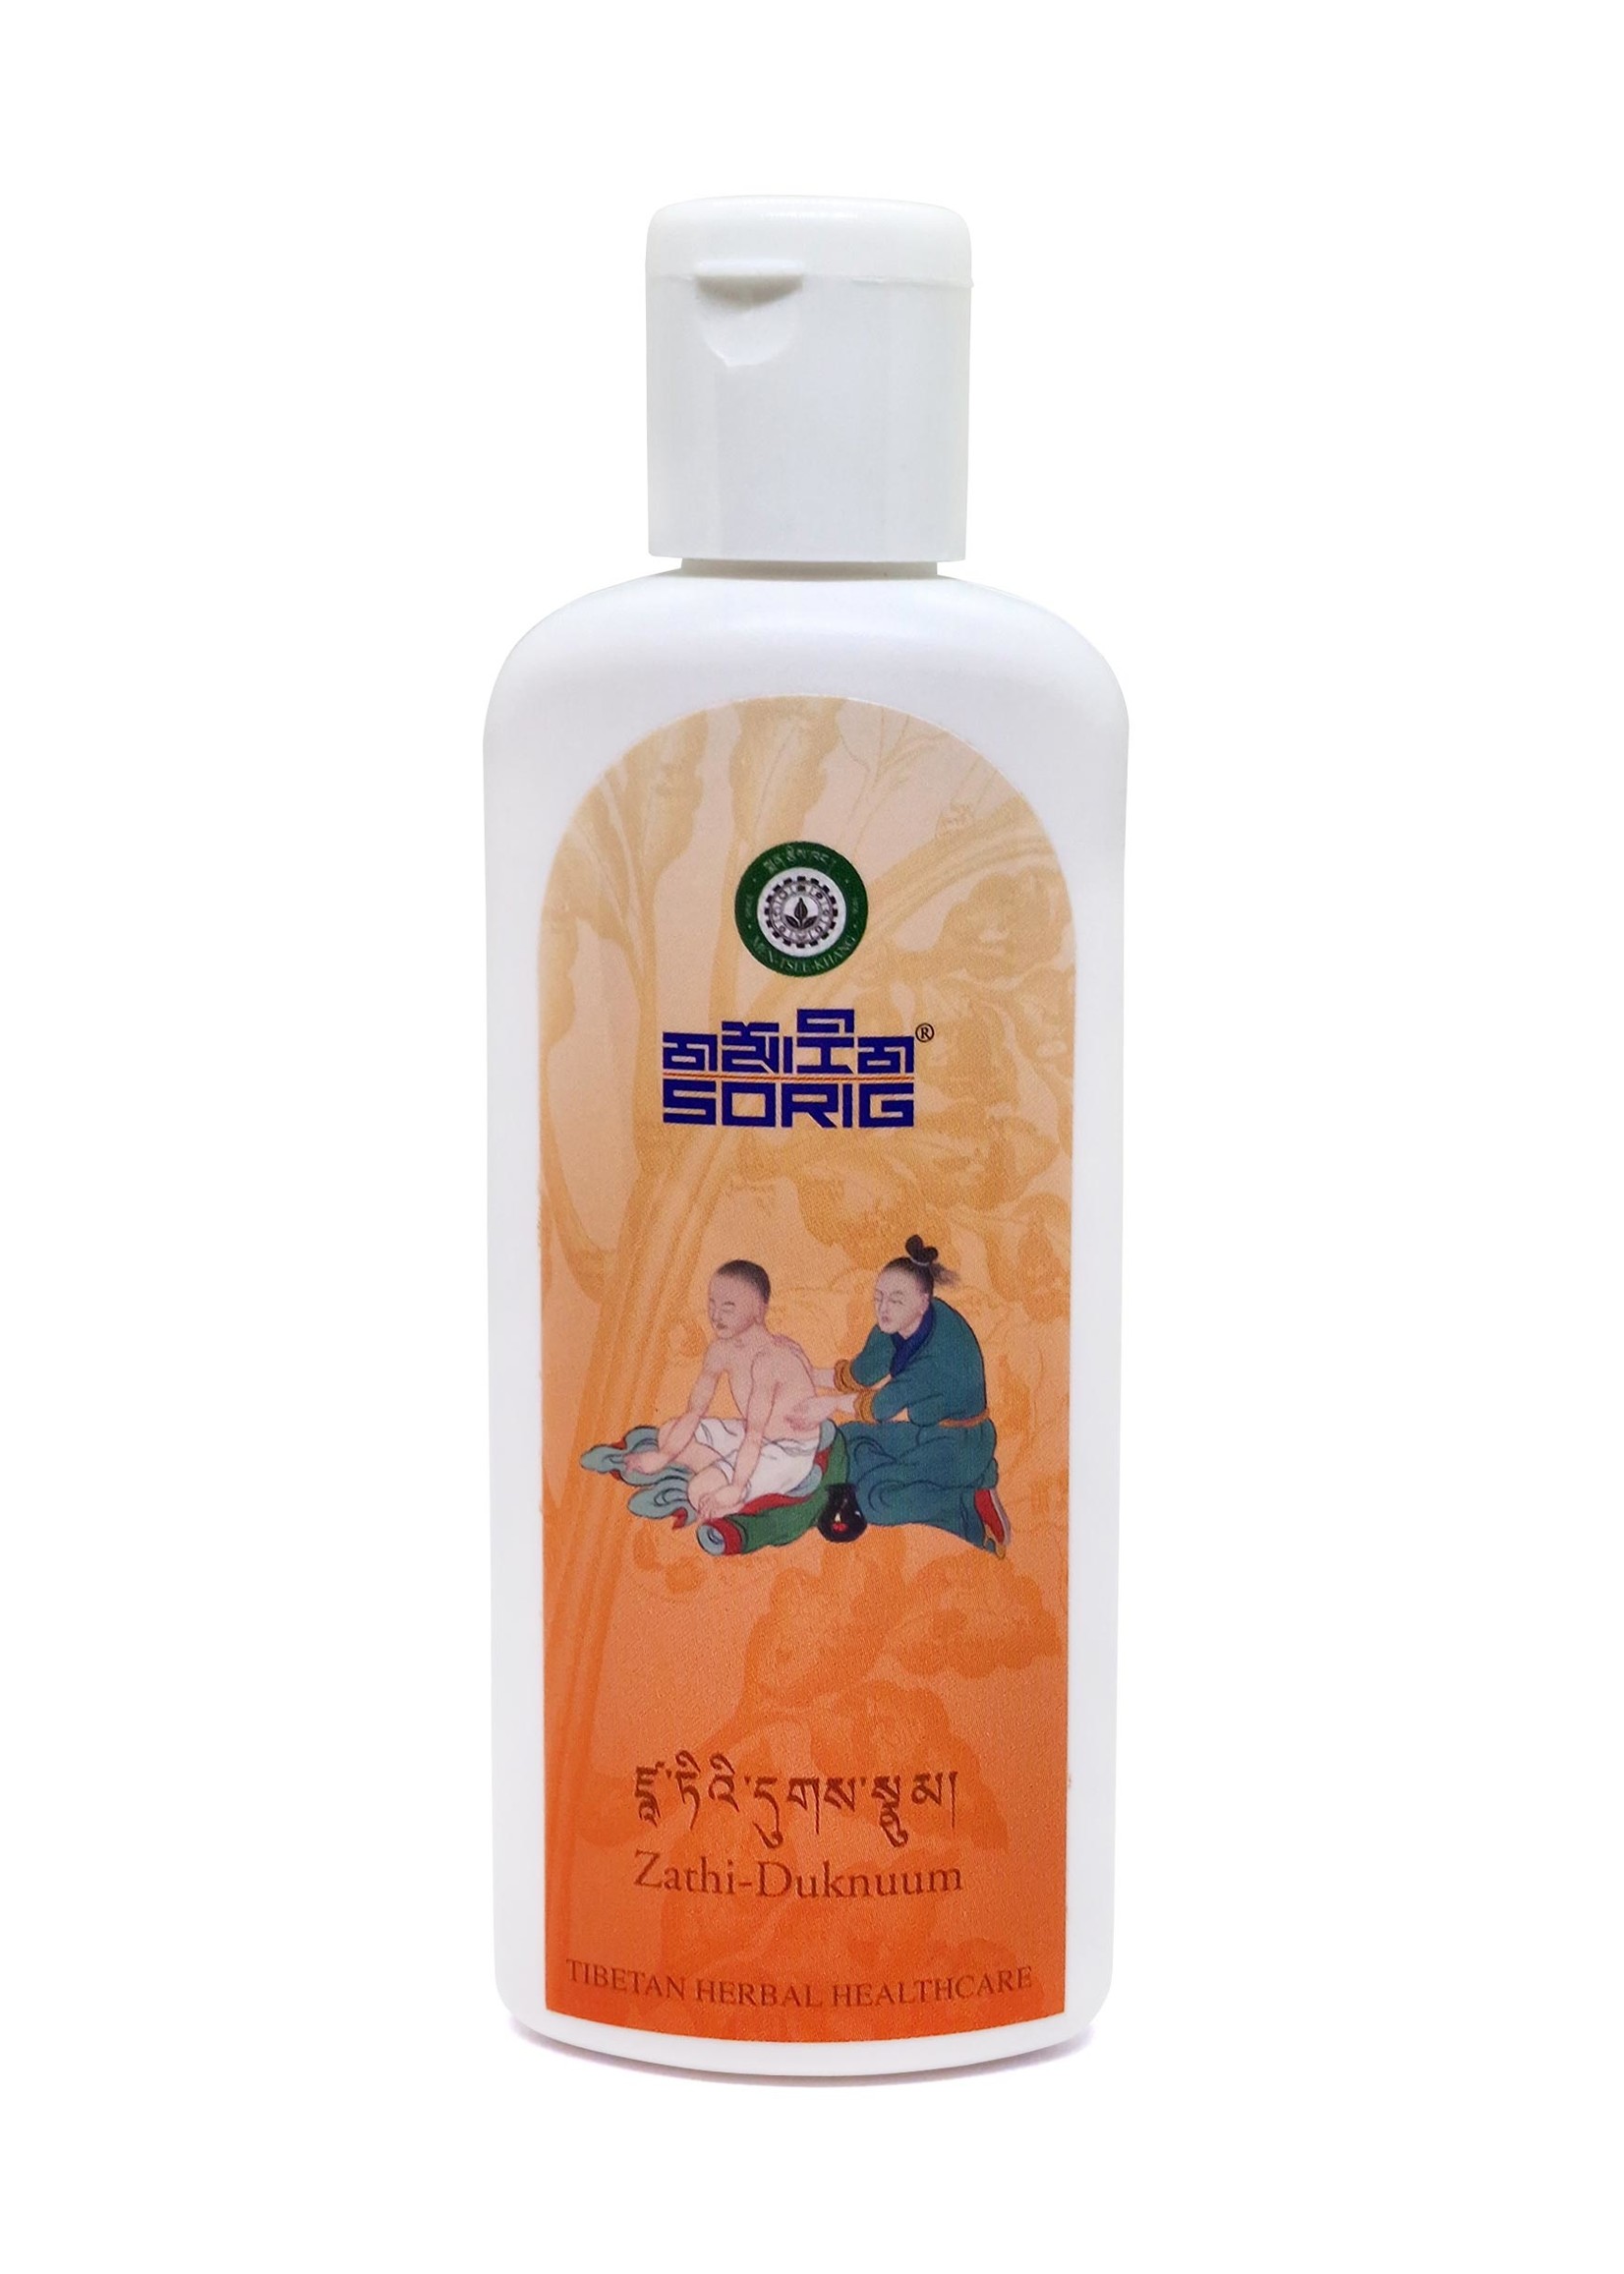 Tibetisches Kräuter Wärmekompressen-Öl, 100 ml, Sorig Zathi-Duknuum